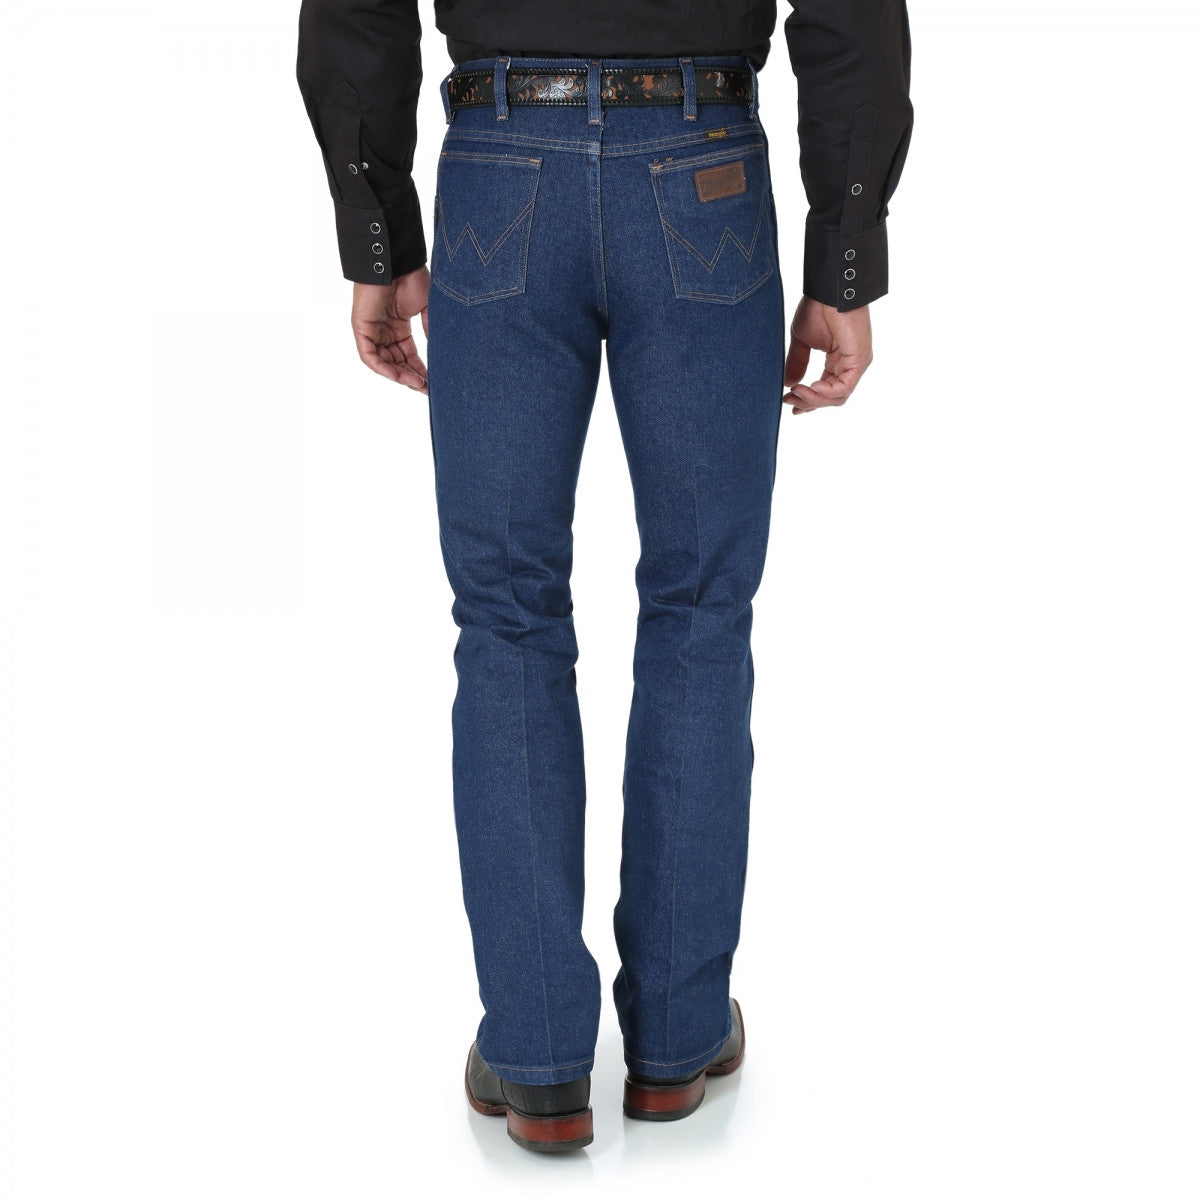 mens bootcut jeans 28x30